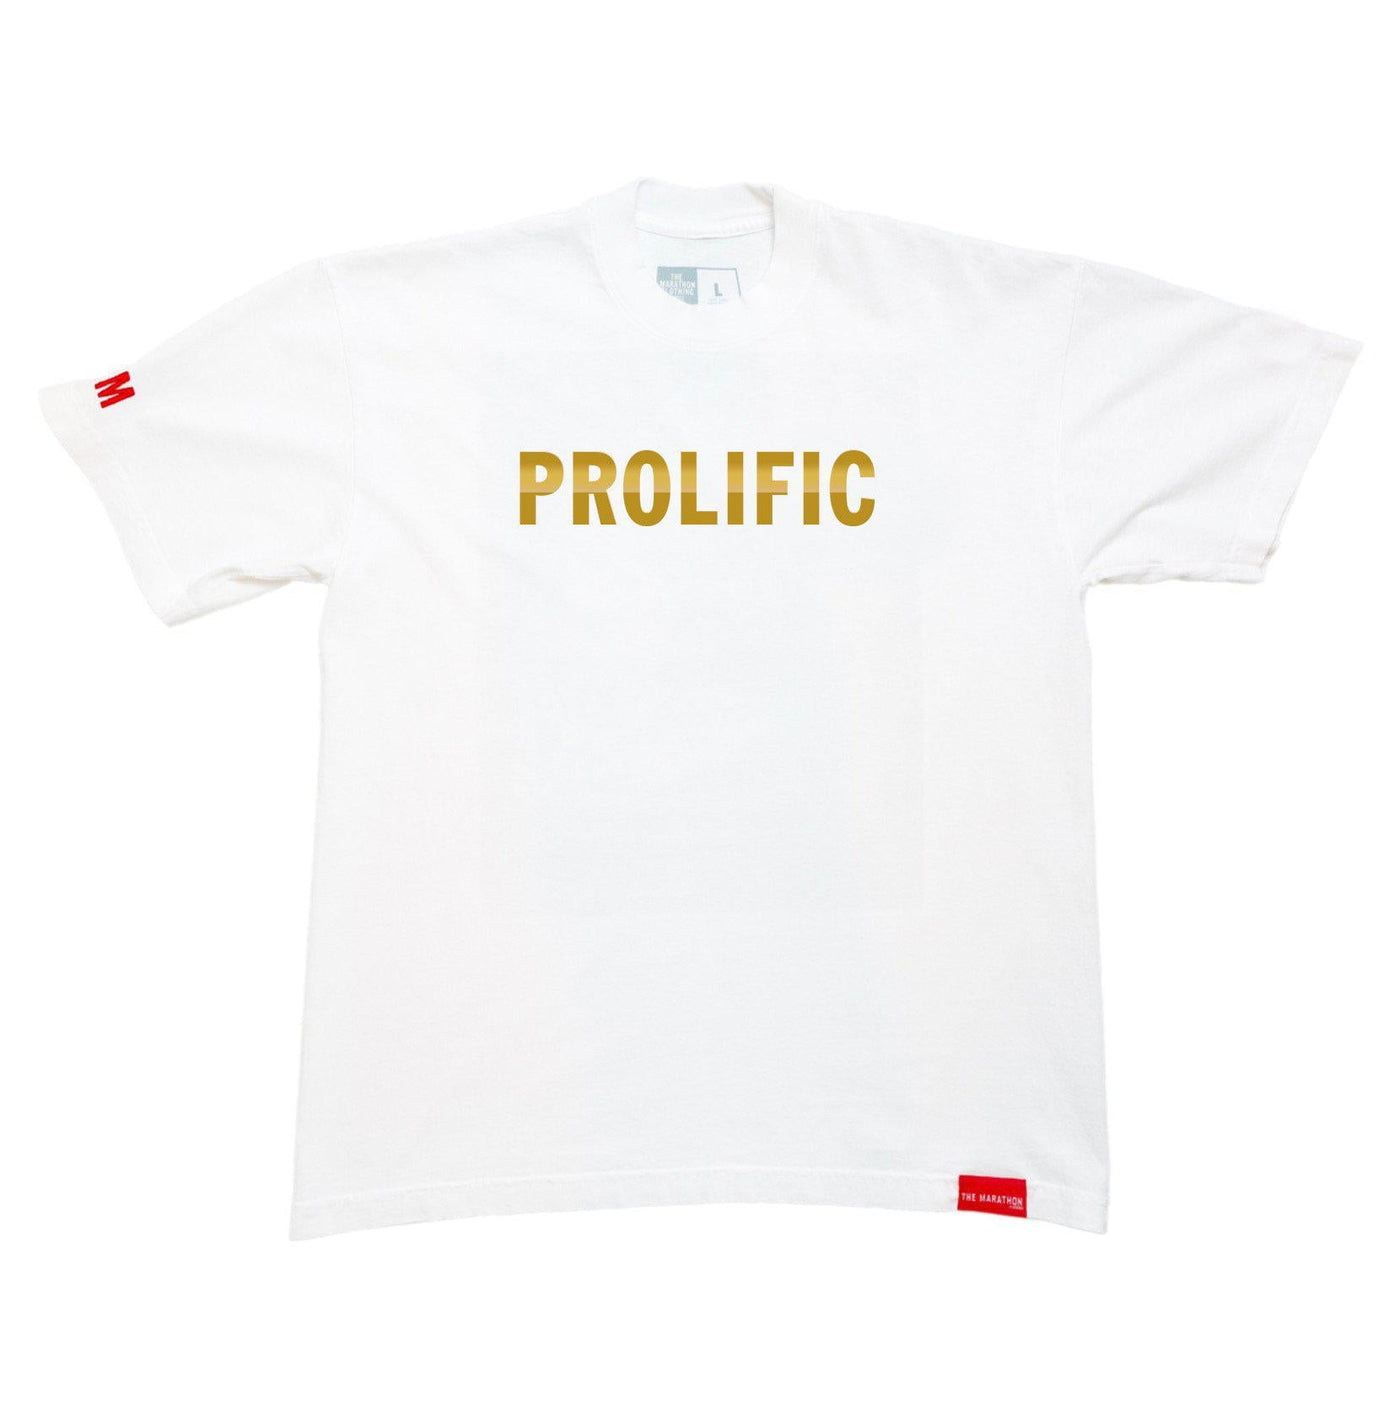 Prolific T-Shirt - White/Gold Foil